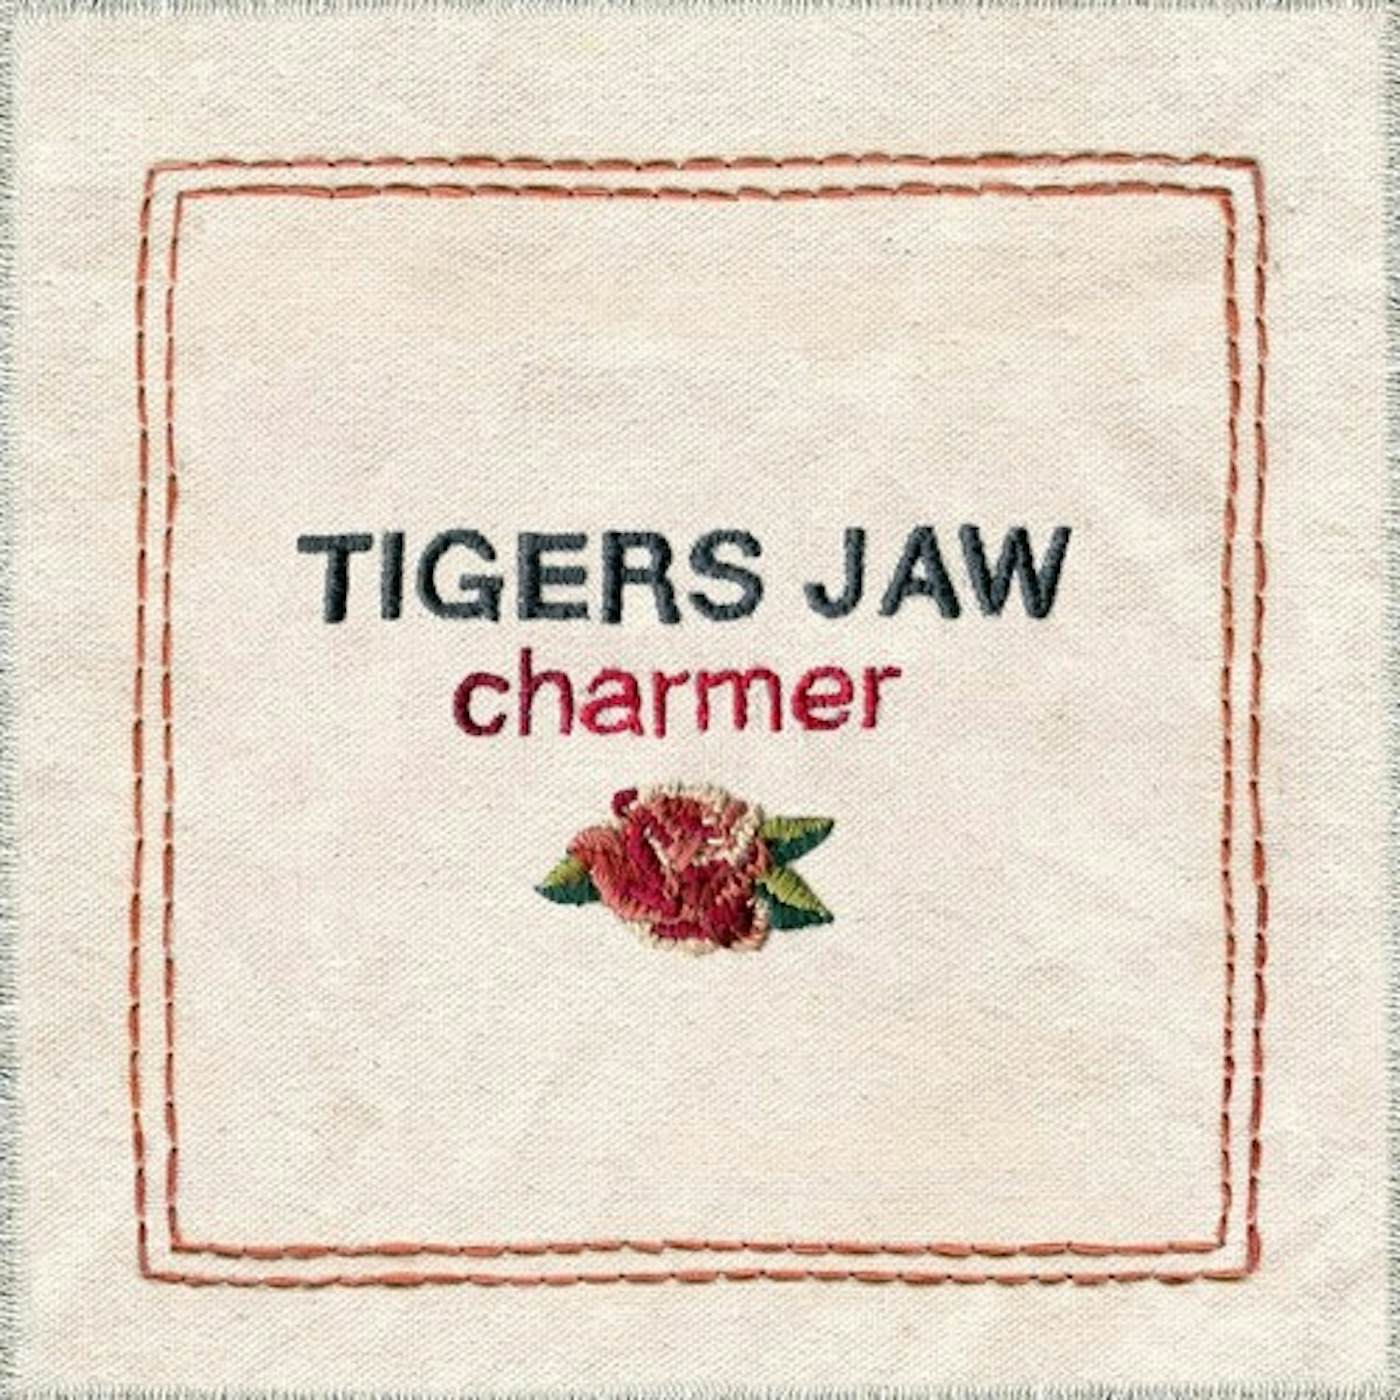 Tigers Jaw CHARMER - TANGERINE ORANGE Vinyl Record